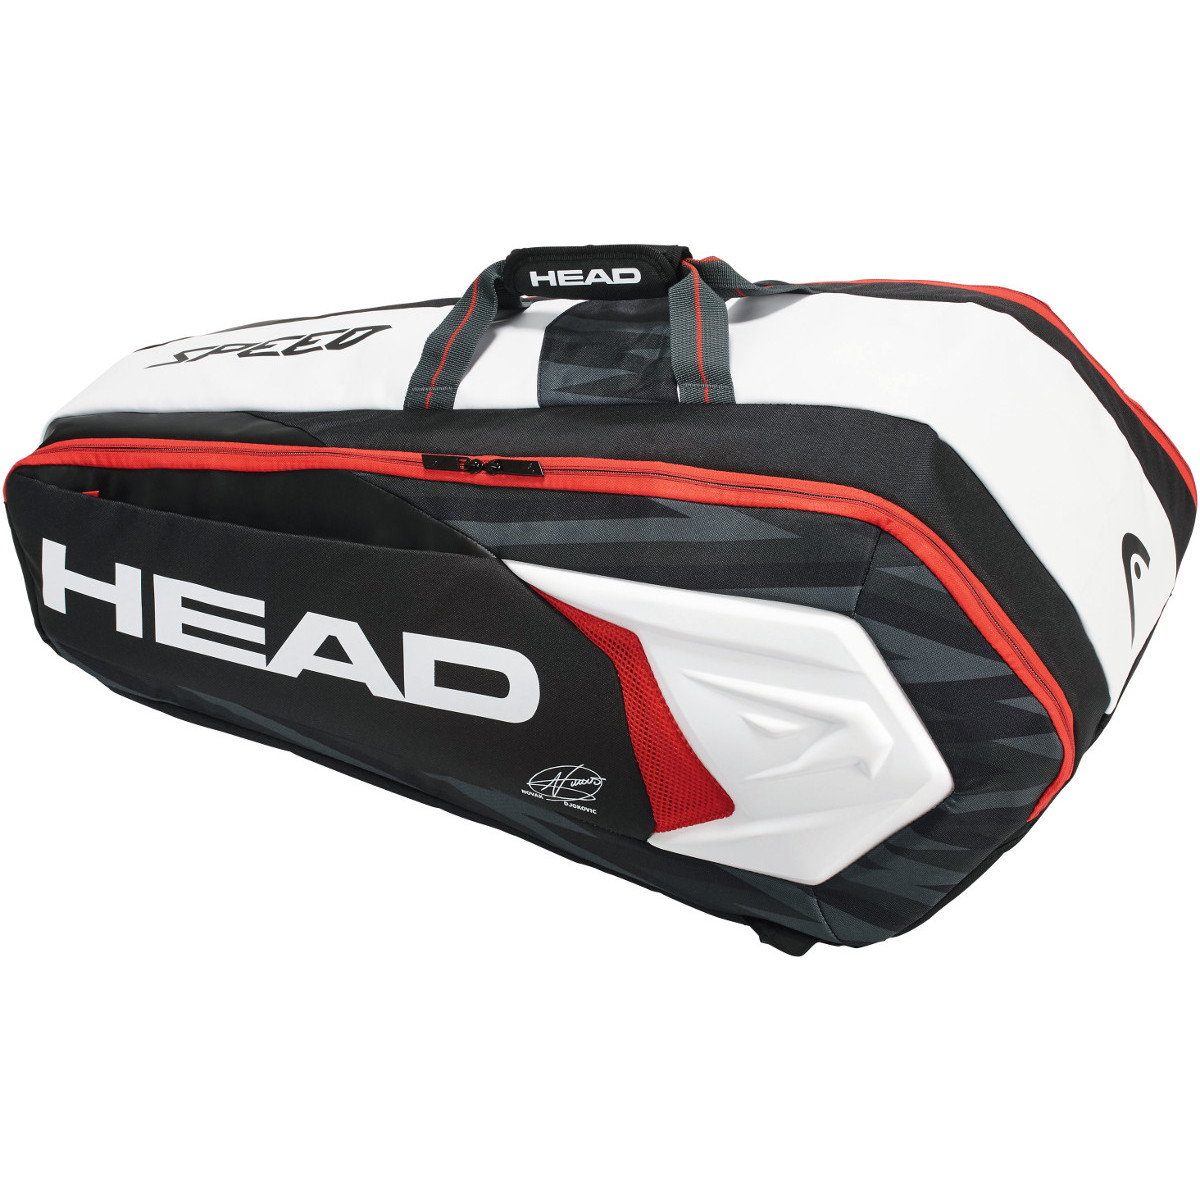 Head Djokovic 9R Supercombi Tennis Bags